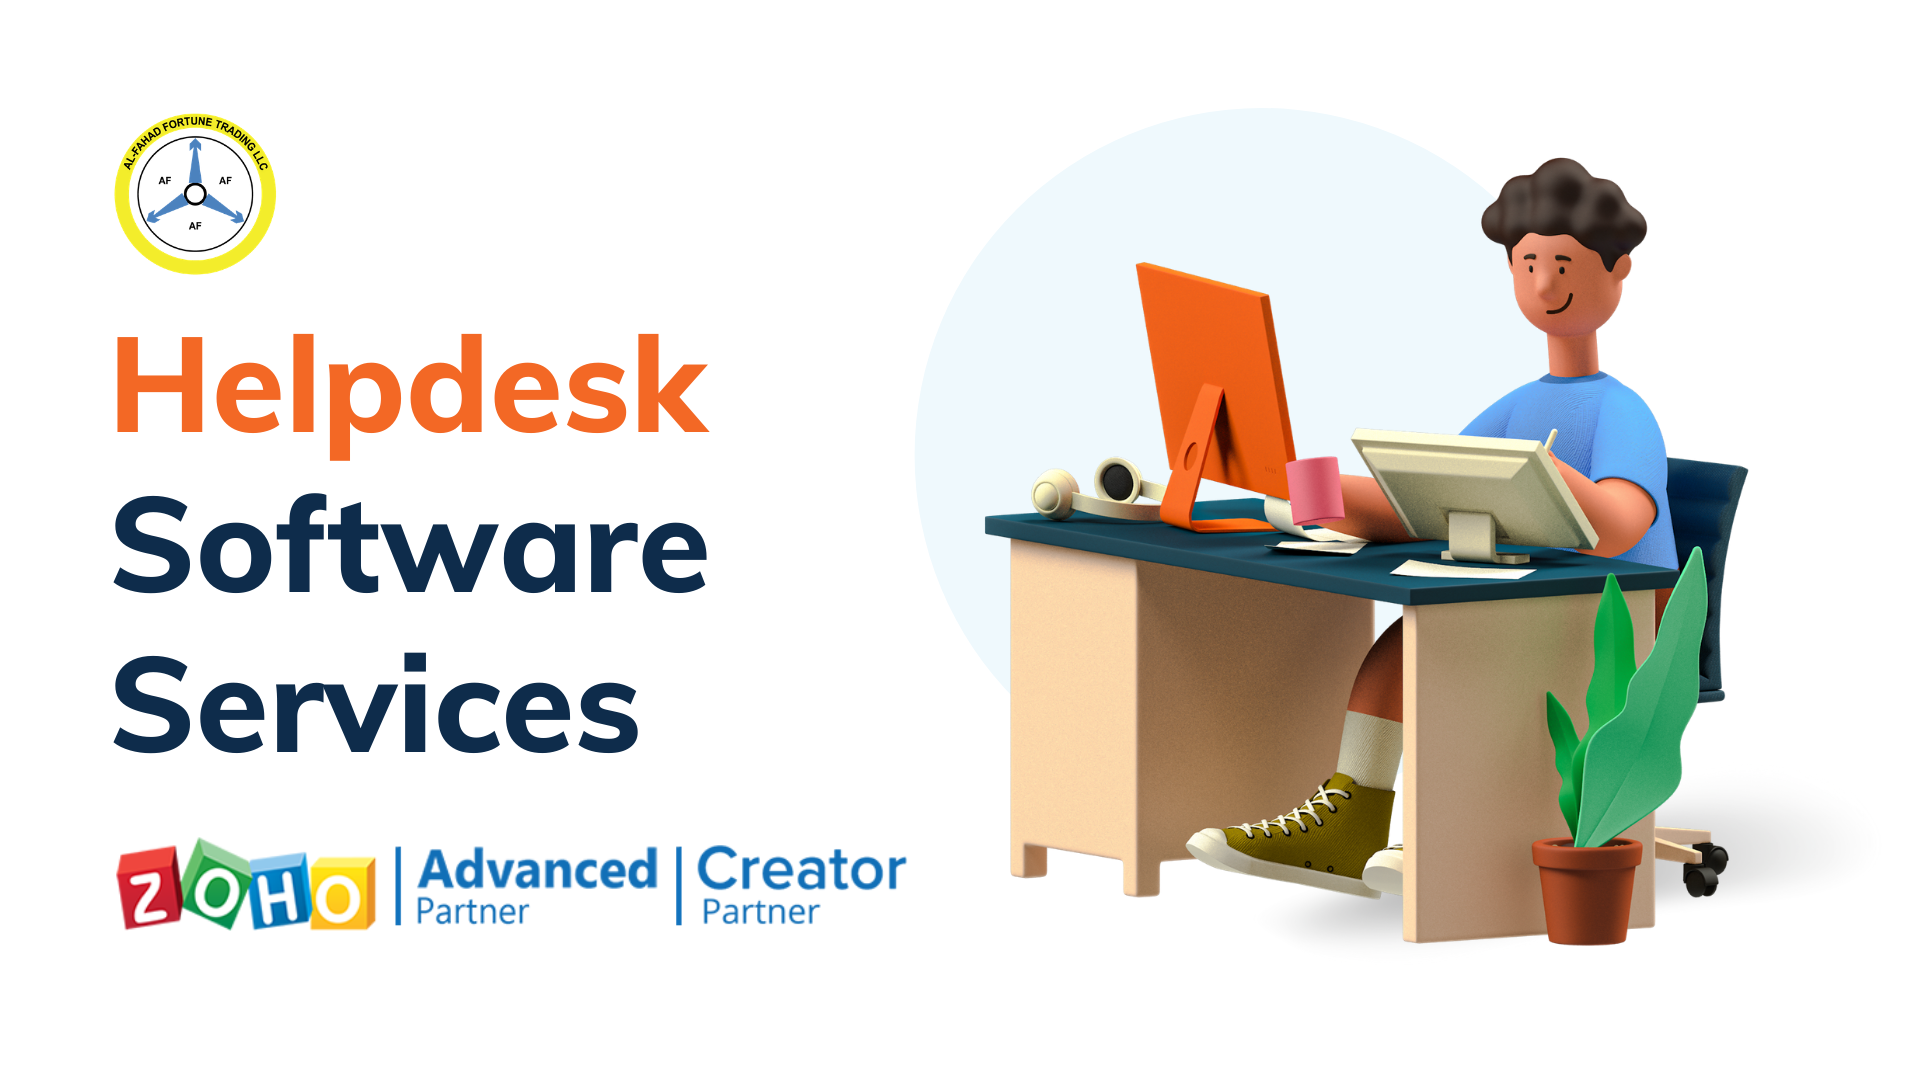 Helpdesk Software Services